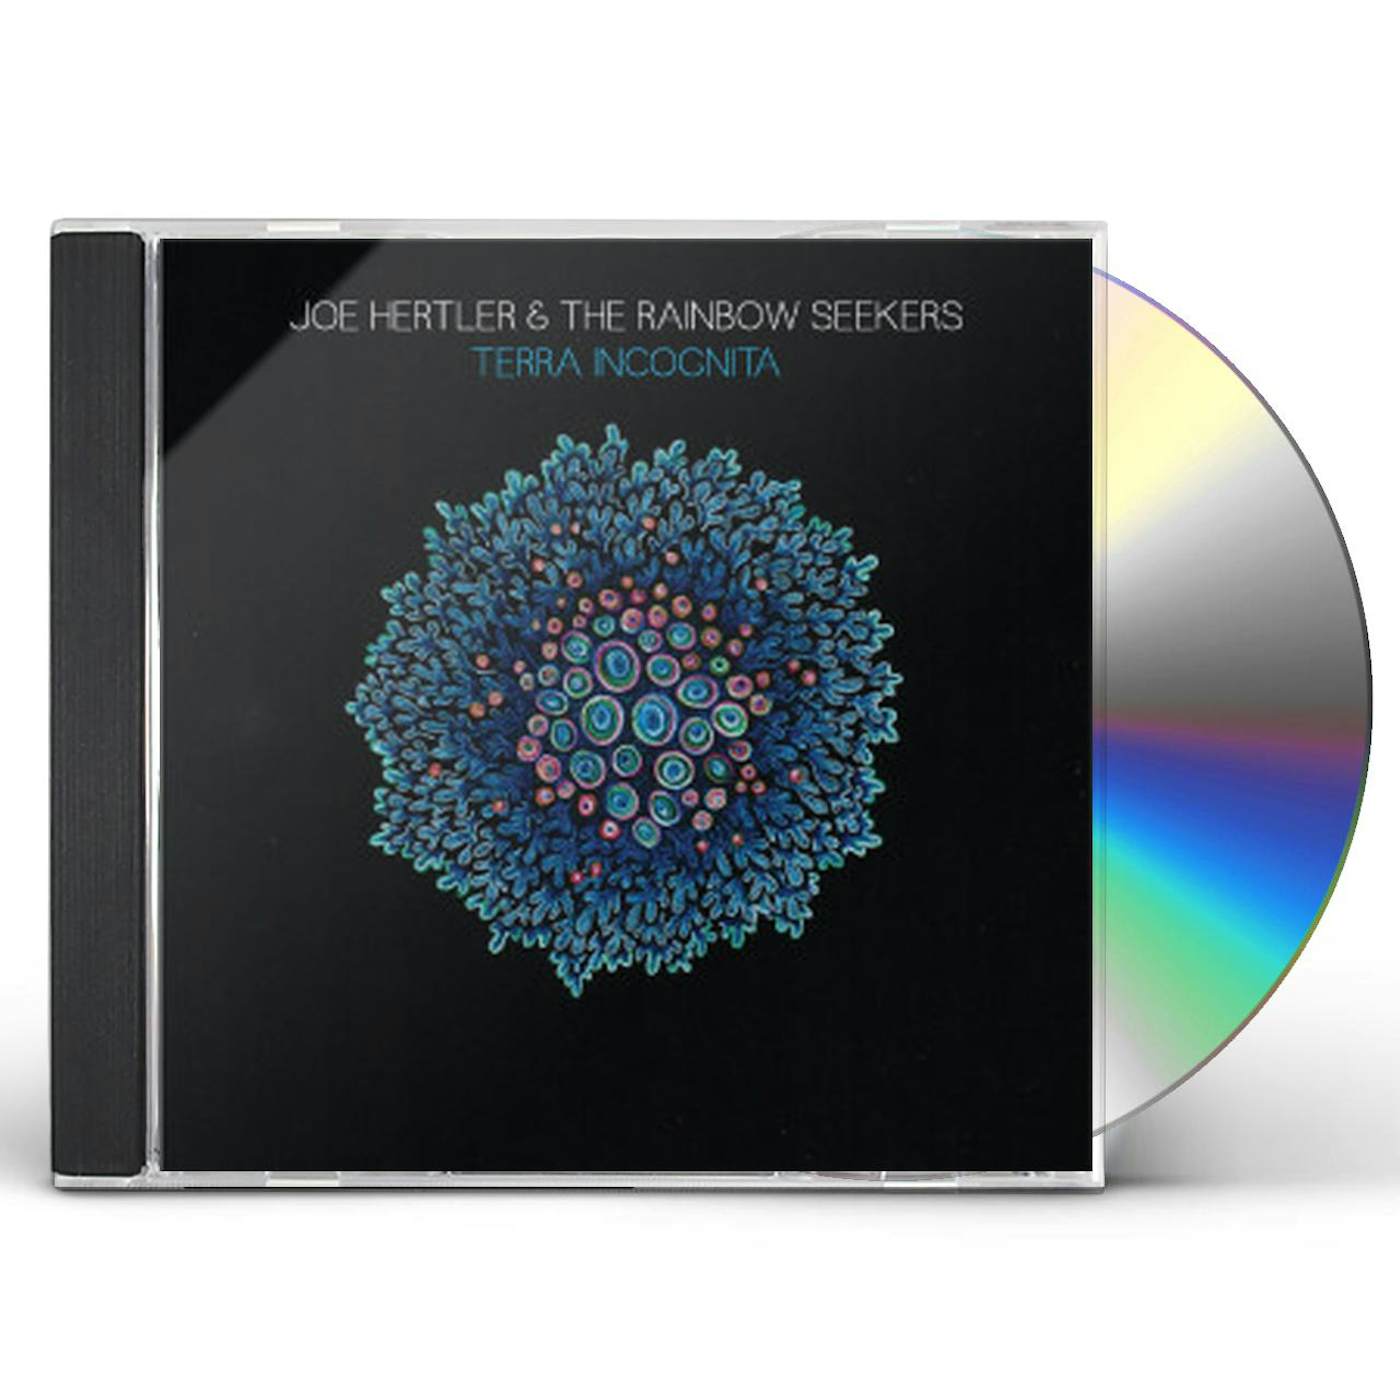 Joe Hertler & The Rainbow Seekers TERRA INCOGNITA CD